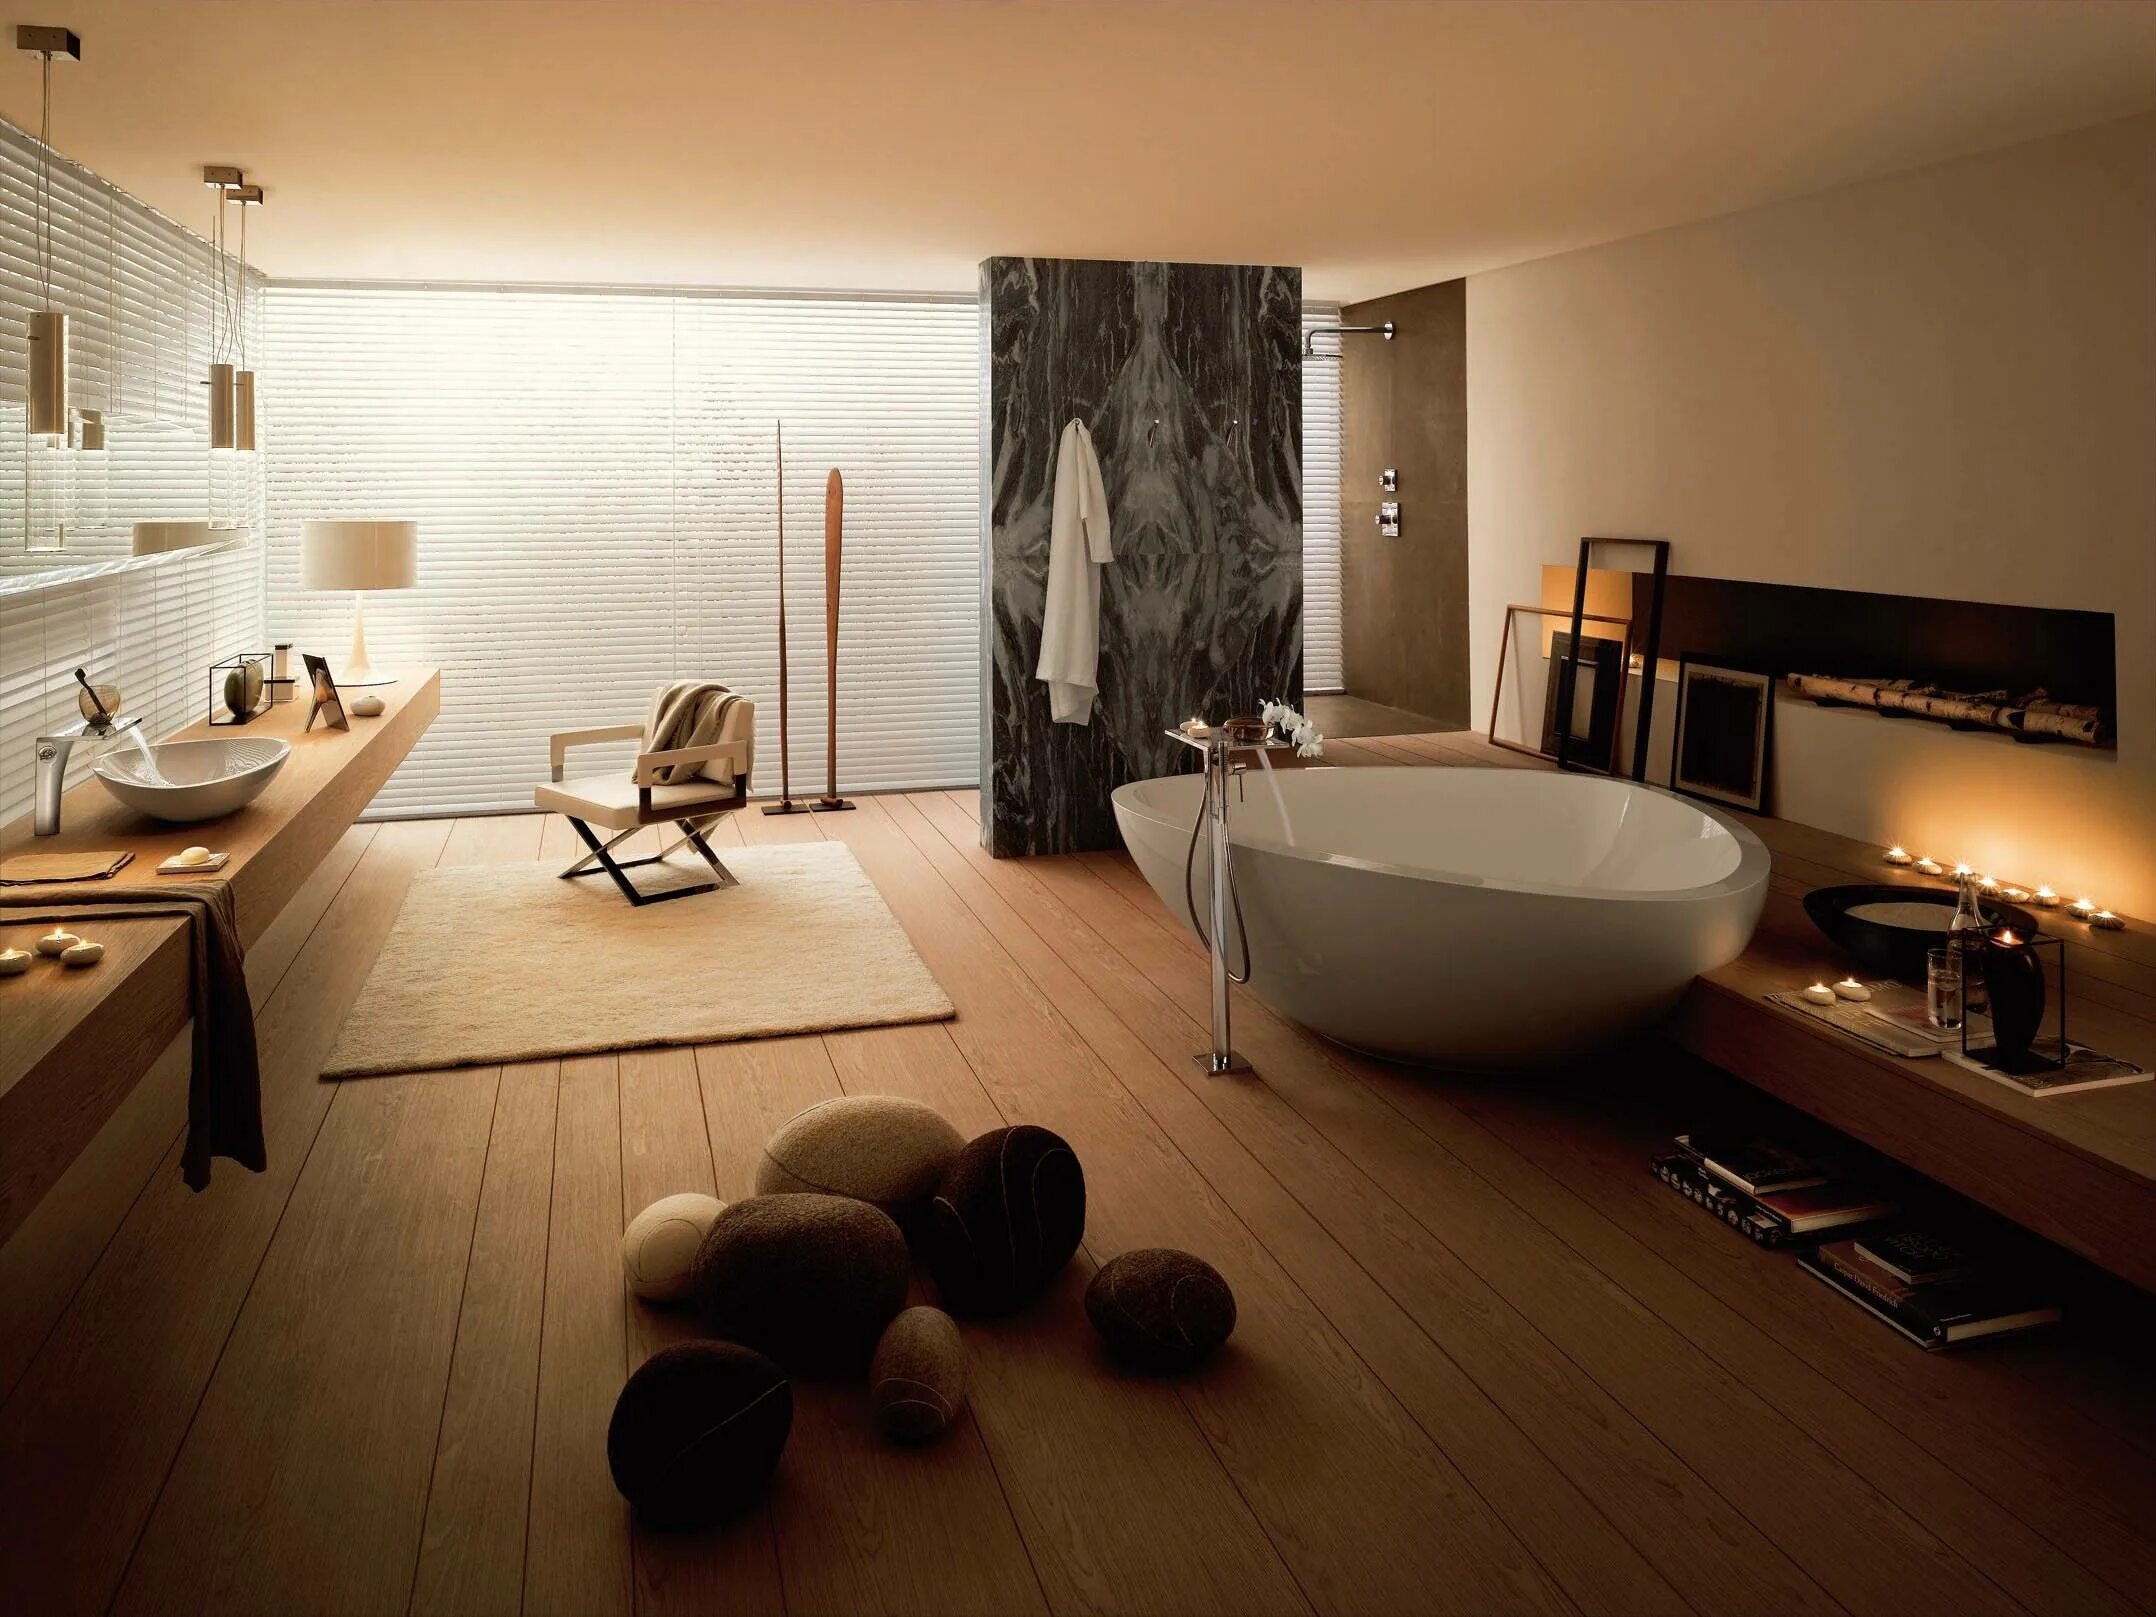 Зеркало Axor Massaud, 42240000. Стильная ванная комната. Современная ванная комната. Интерьер ванной комнаты. Ну ванной комнаты